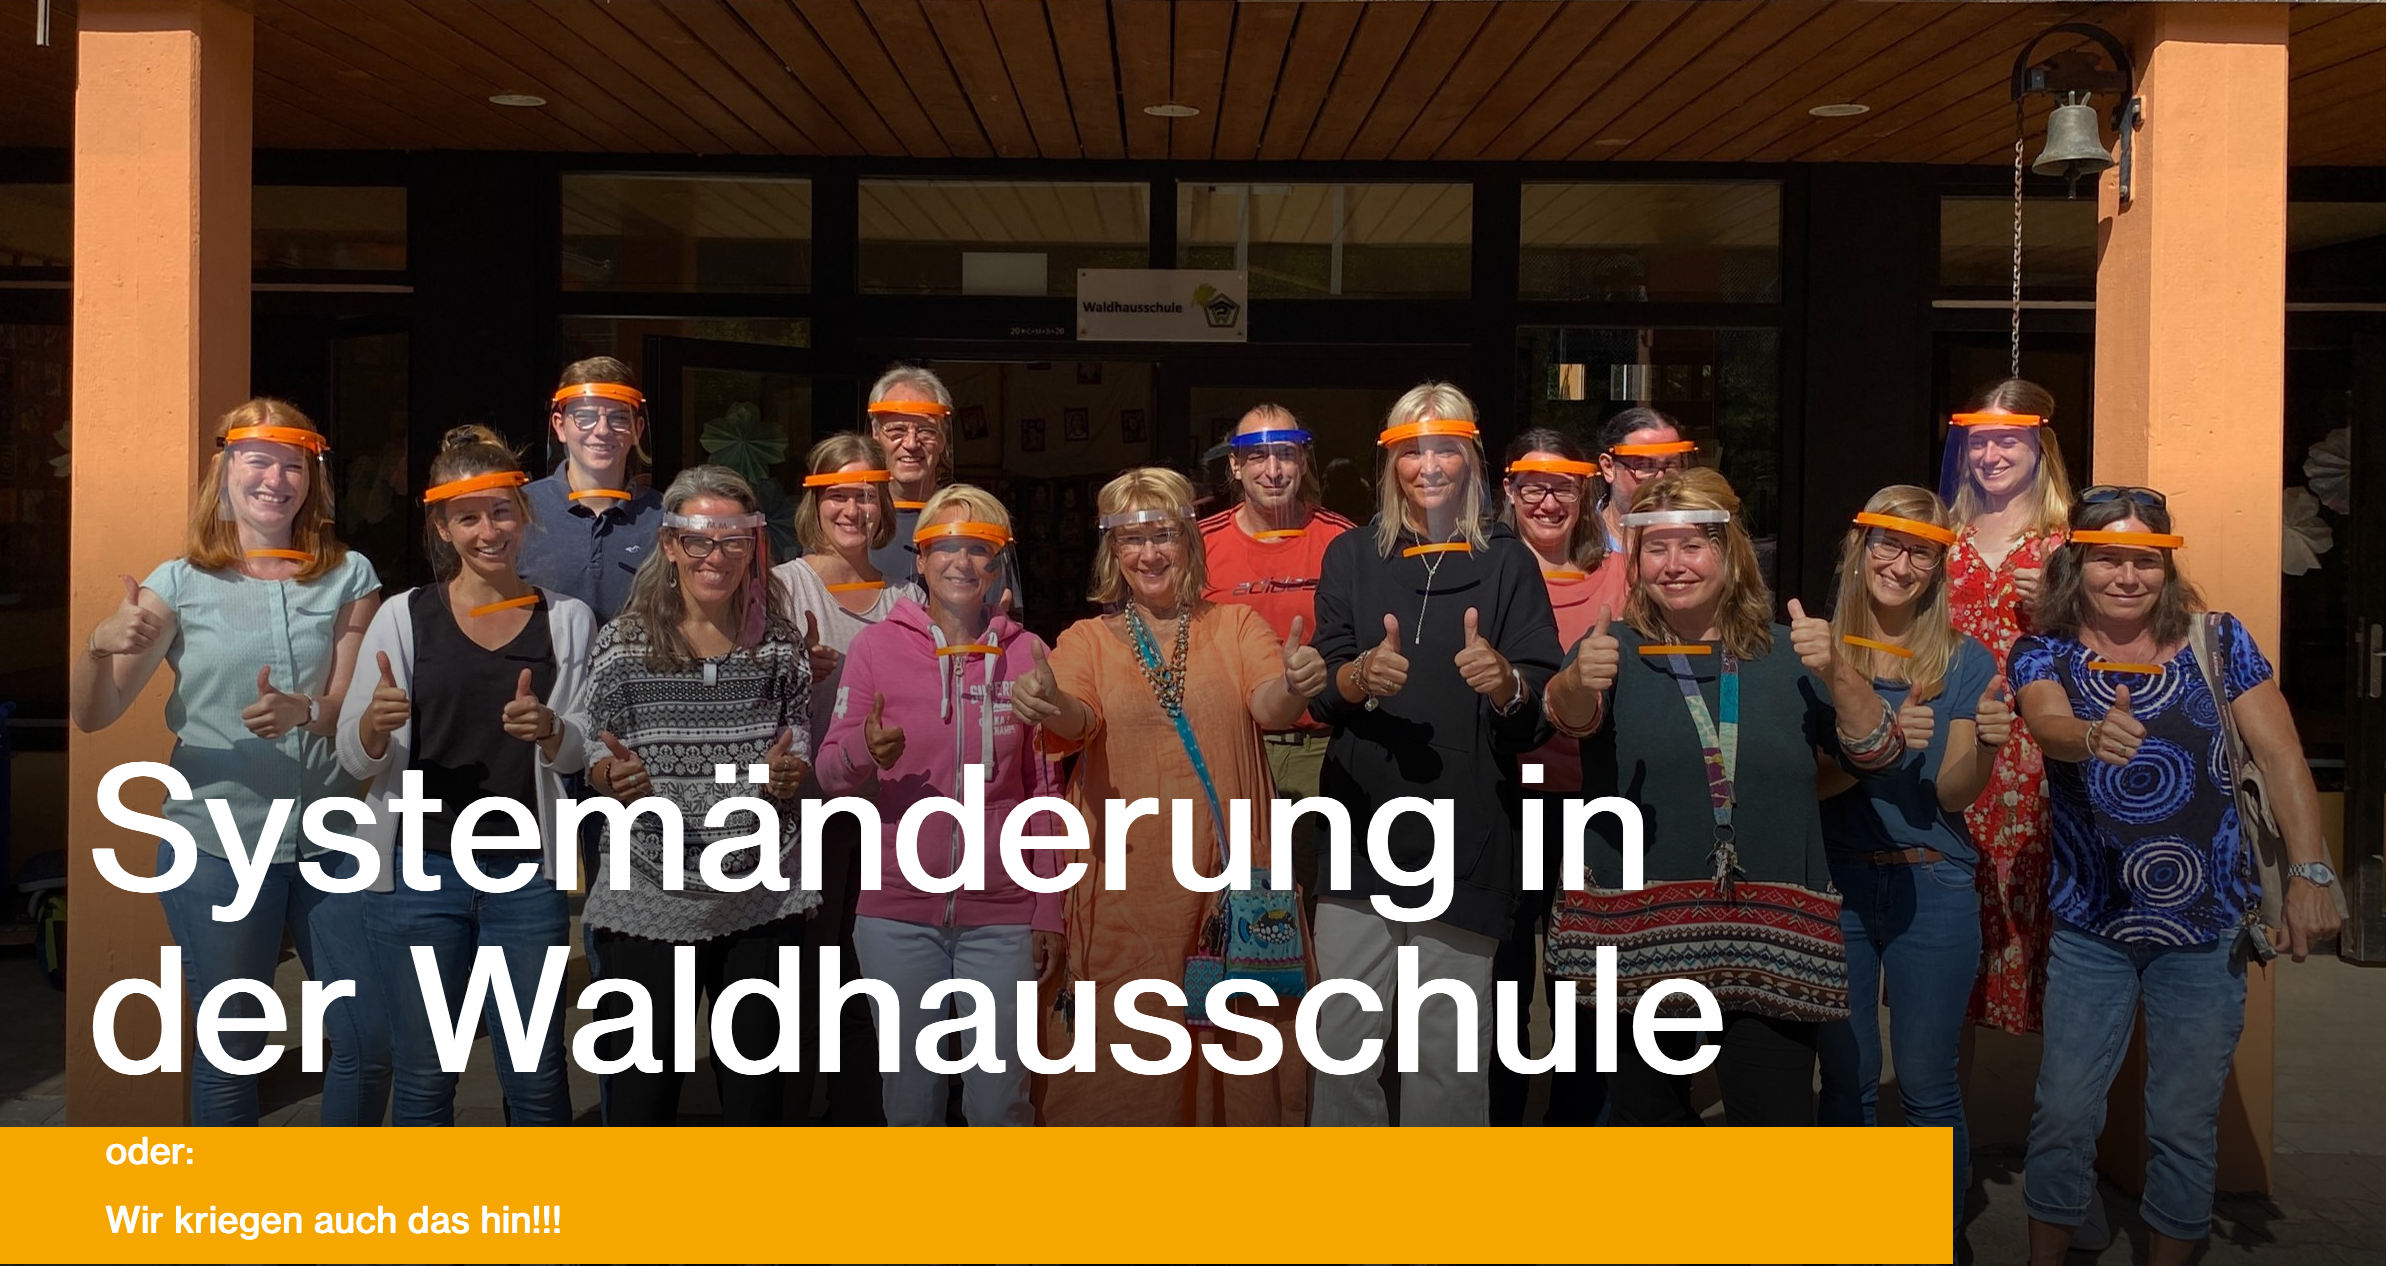 Waldhausschule goes digital  2